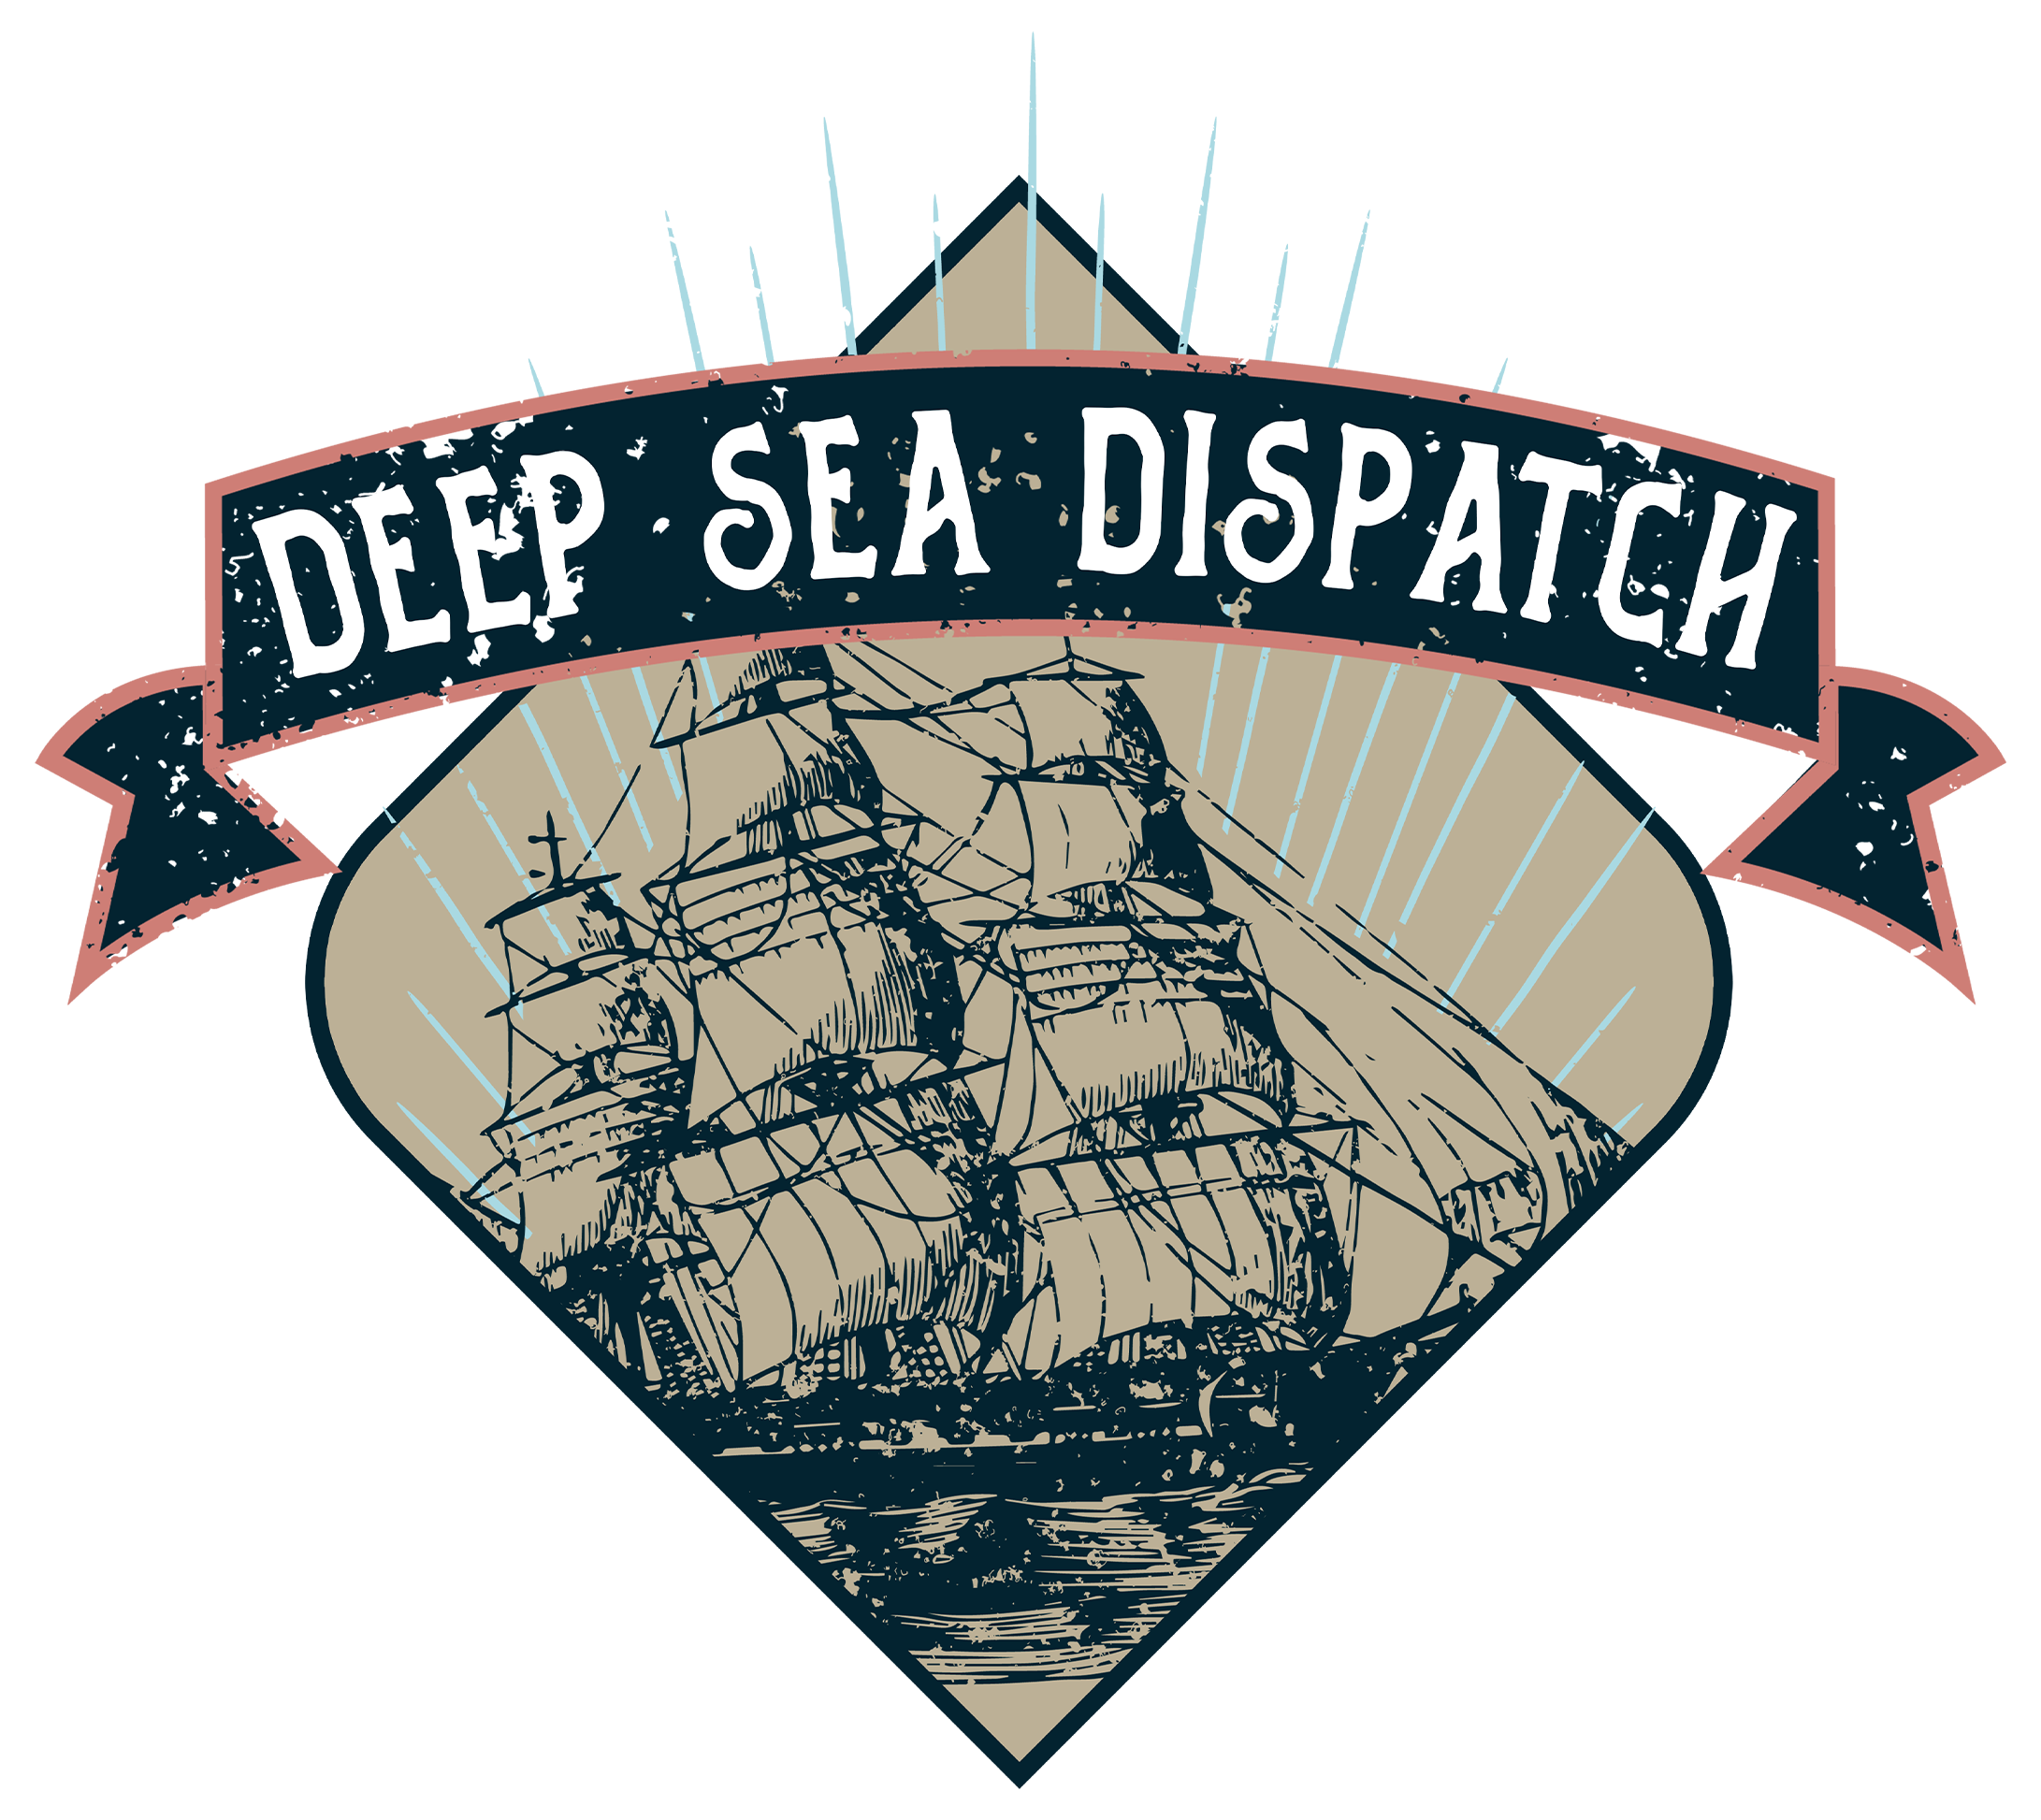 DeepSeaDispatch